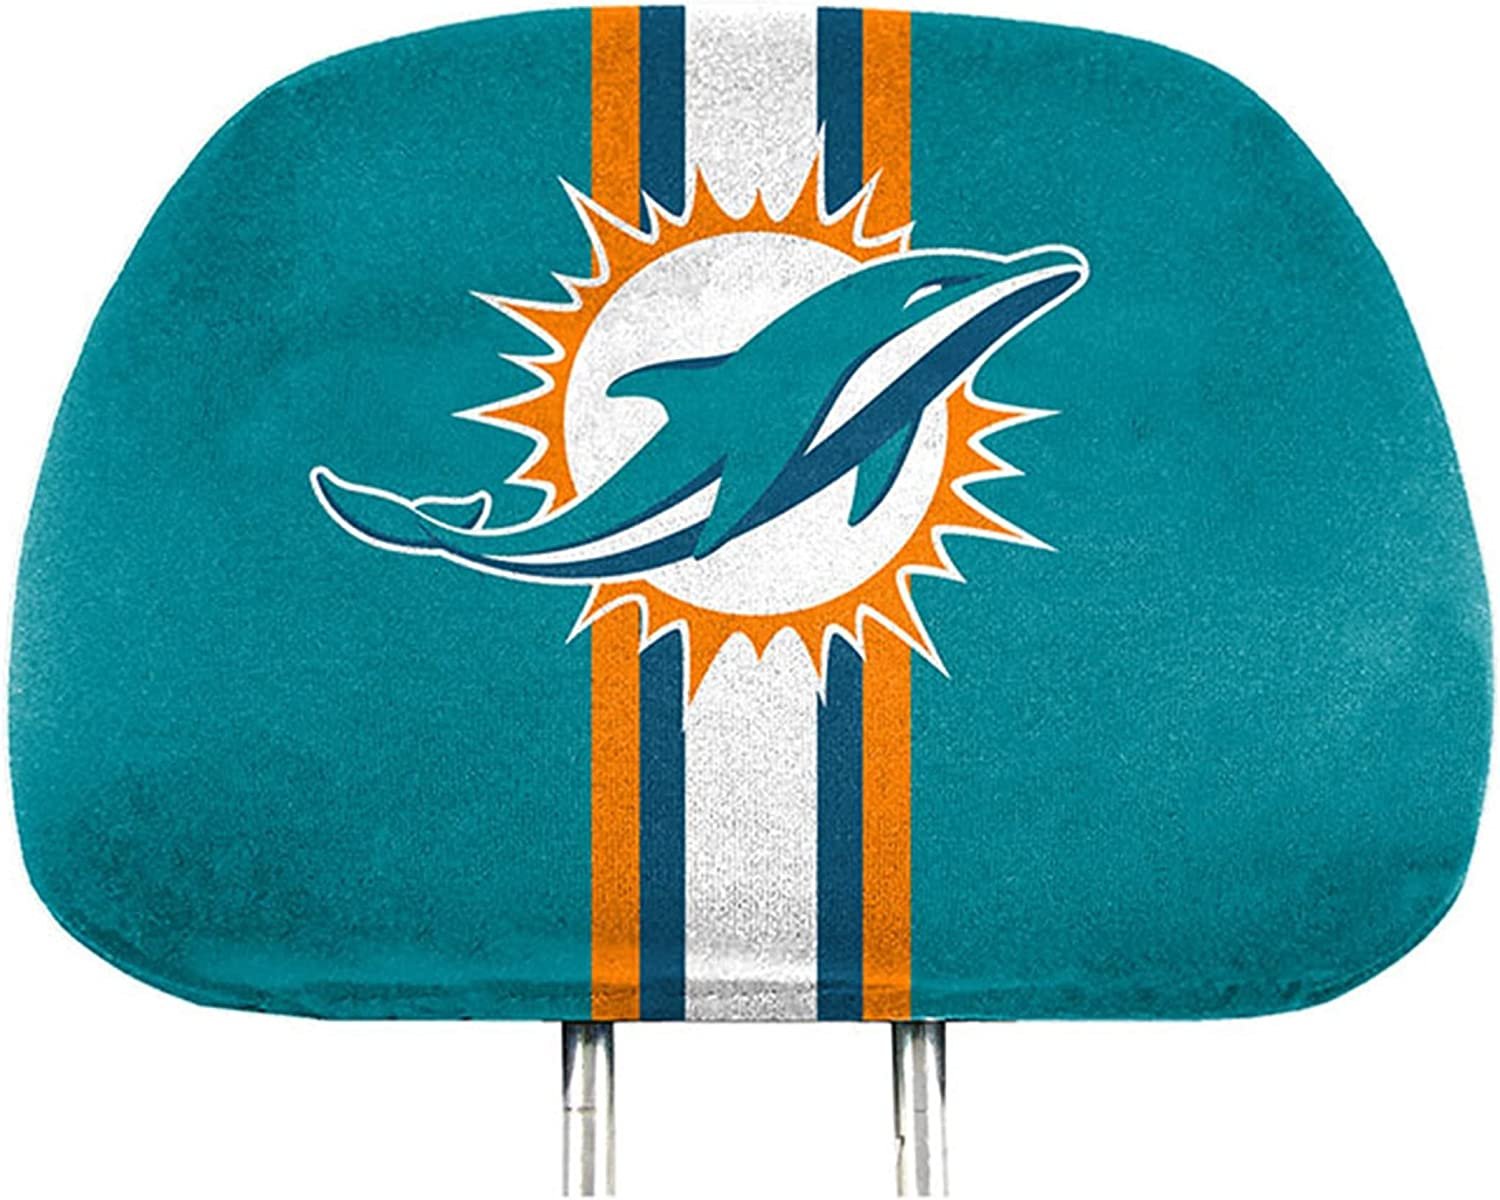 Miami Dolphins Premium Pair of Auto Head Rest Covers, Full Color Printed, Elastic, 10x14 Inch